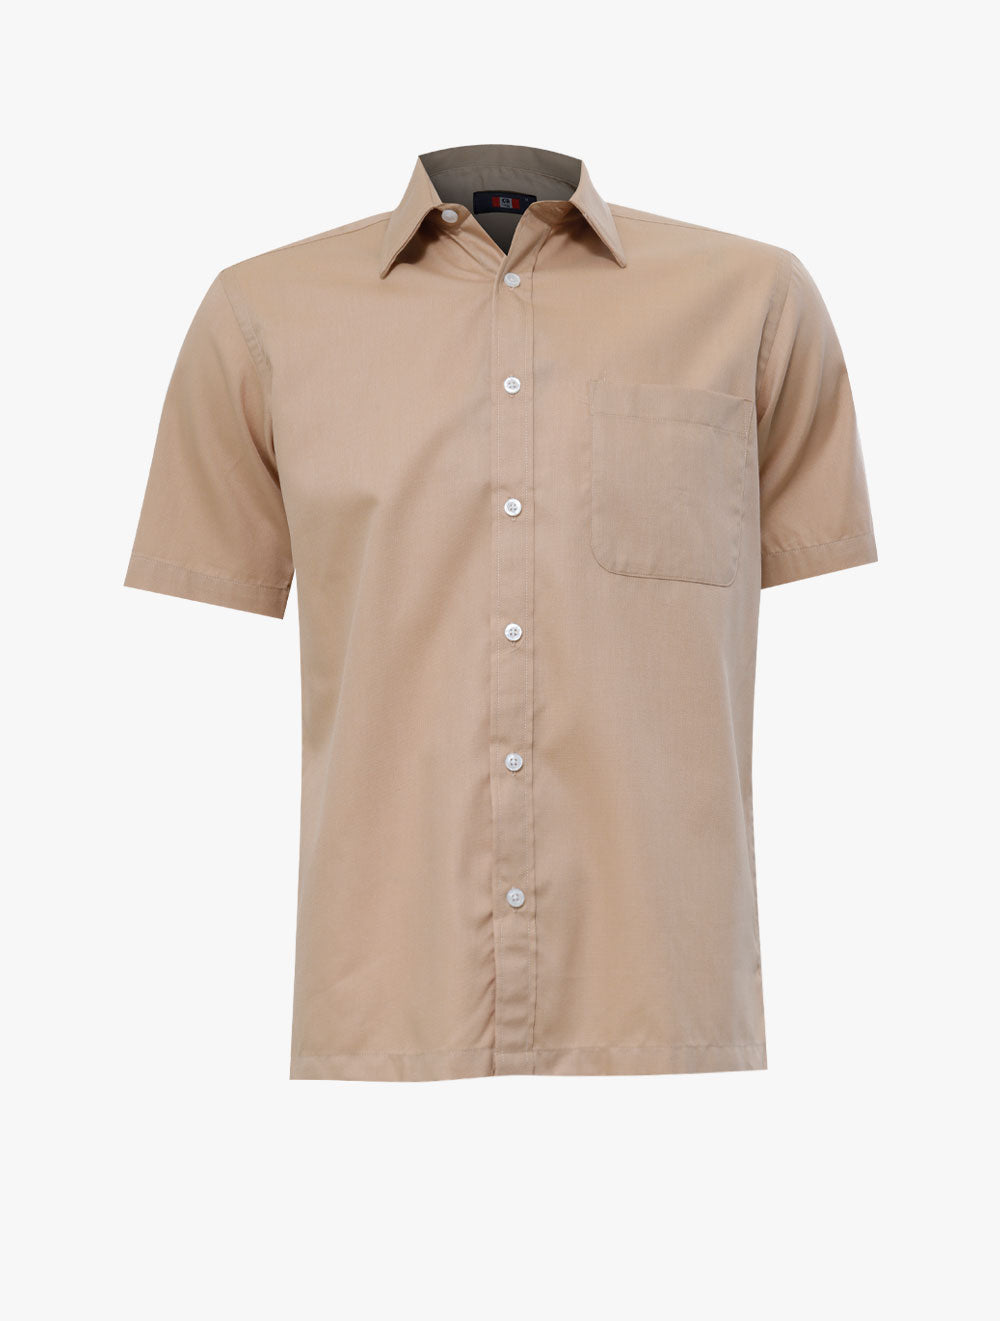 GQ
Casual Short Sleeve Shirt 1622304XXL94